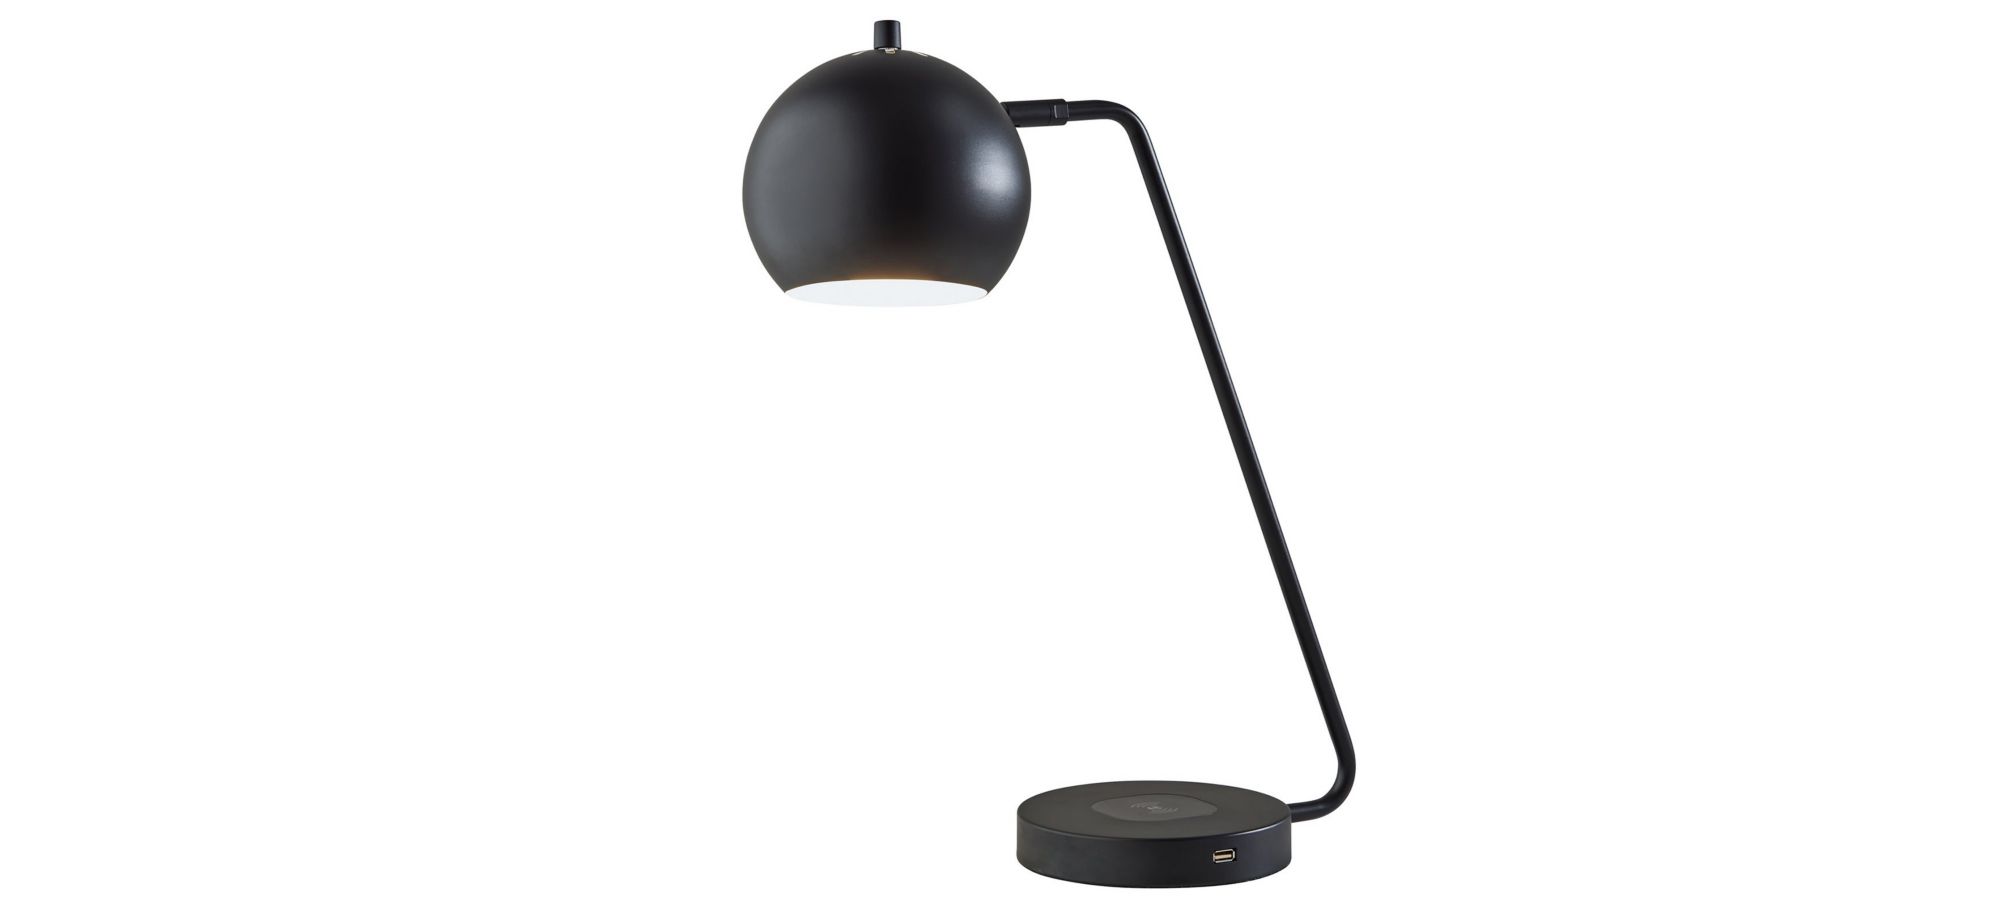 Emerson Desk Lamp w/ Wireless Charging in Black by Adesso Inc